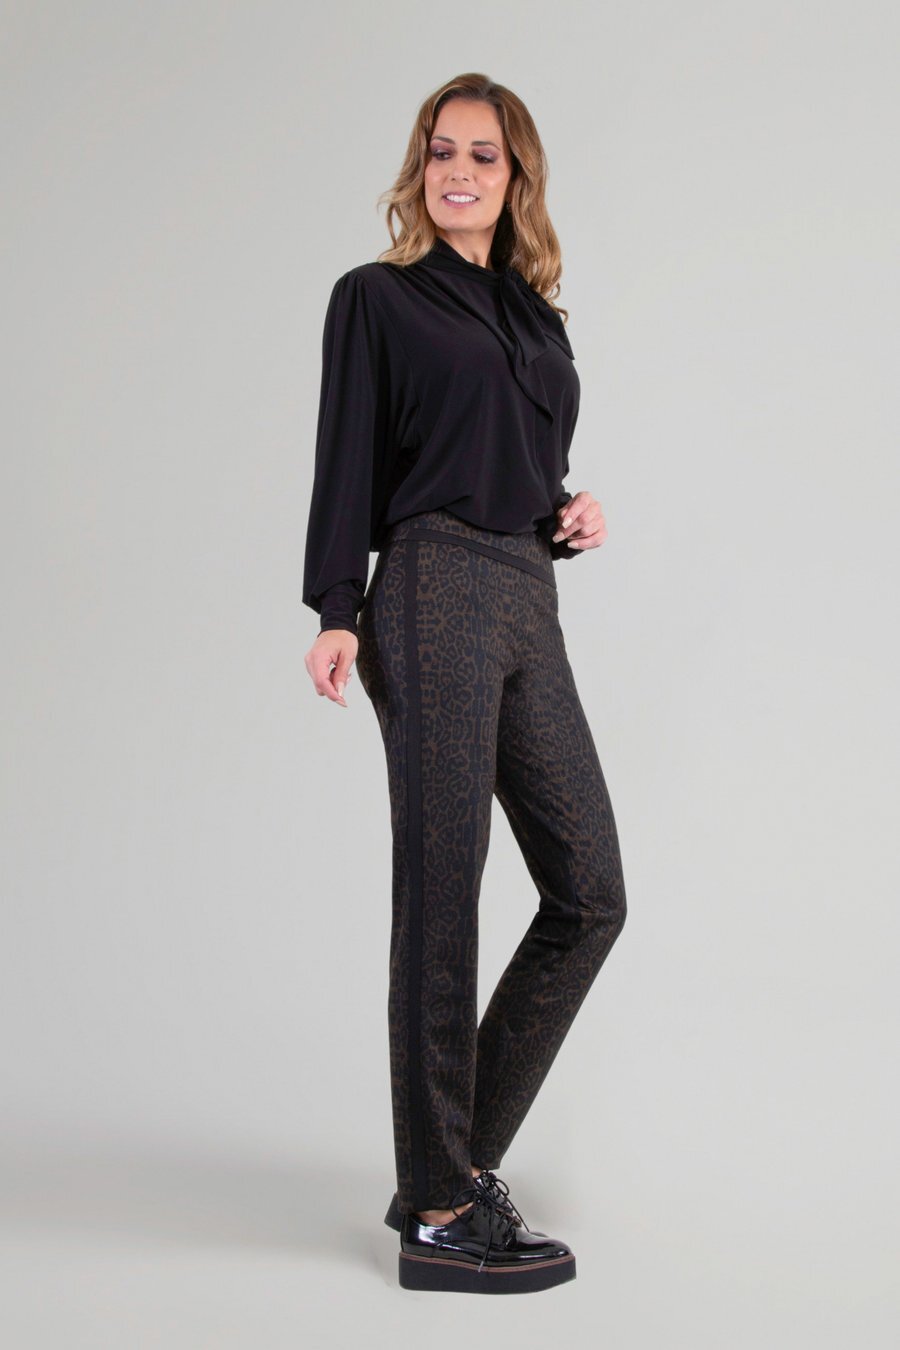 Raffinalla Brown Leopard Pants Made in Canada - DDBooski Clothing Co